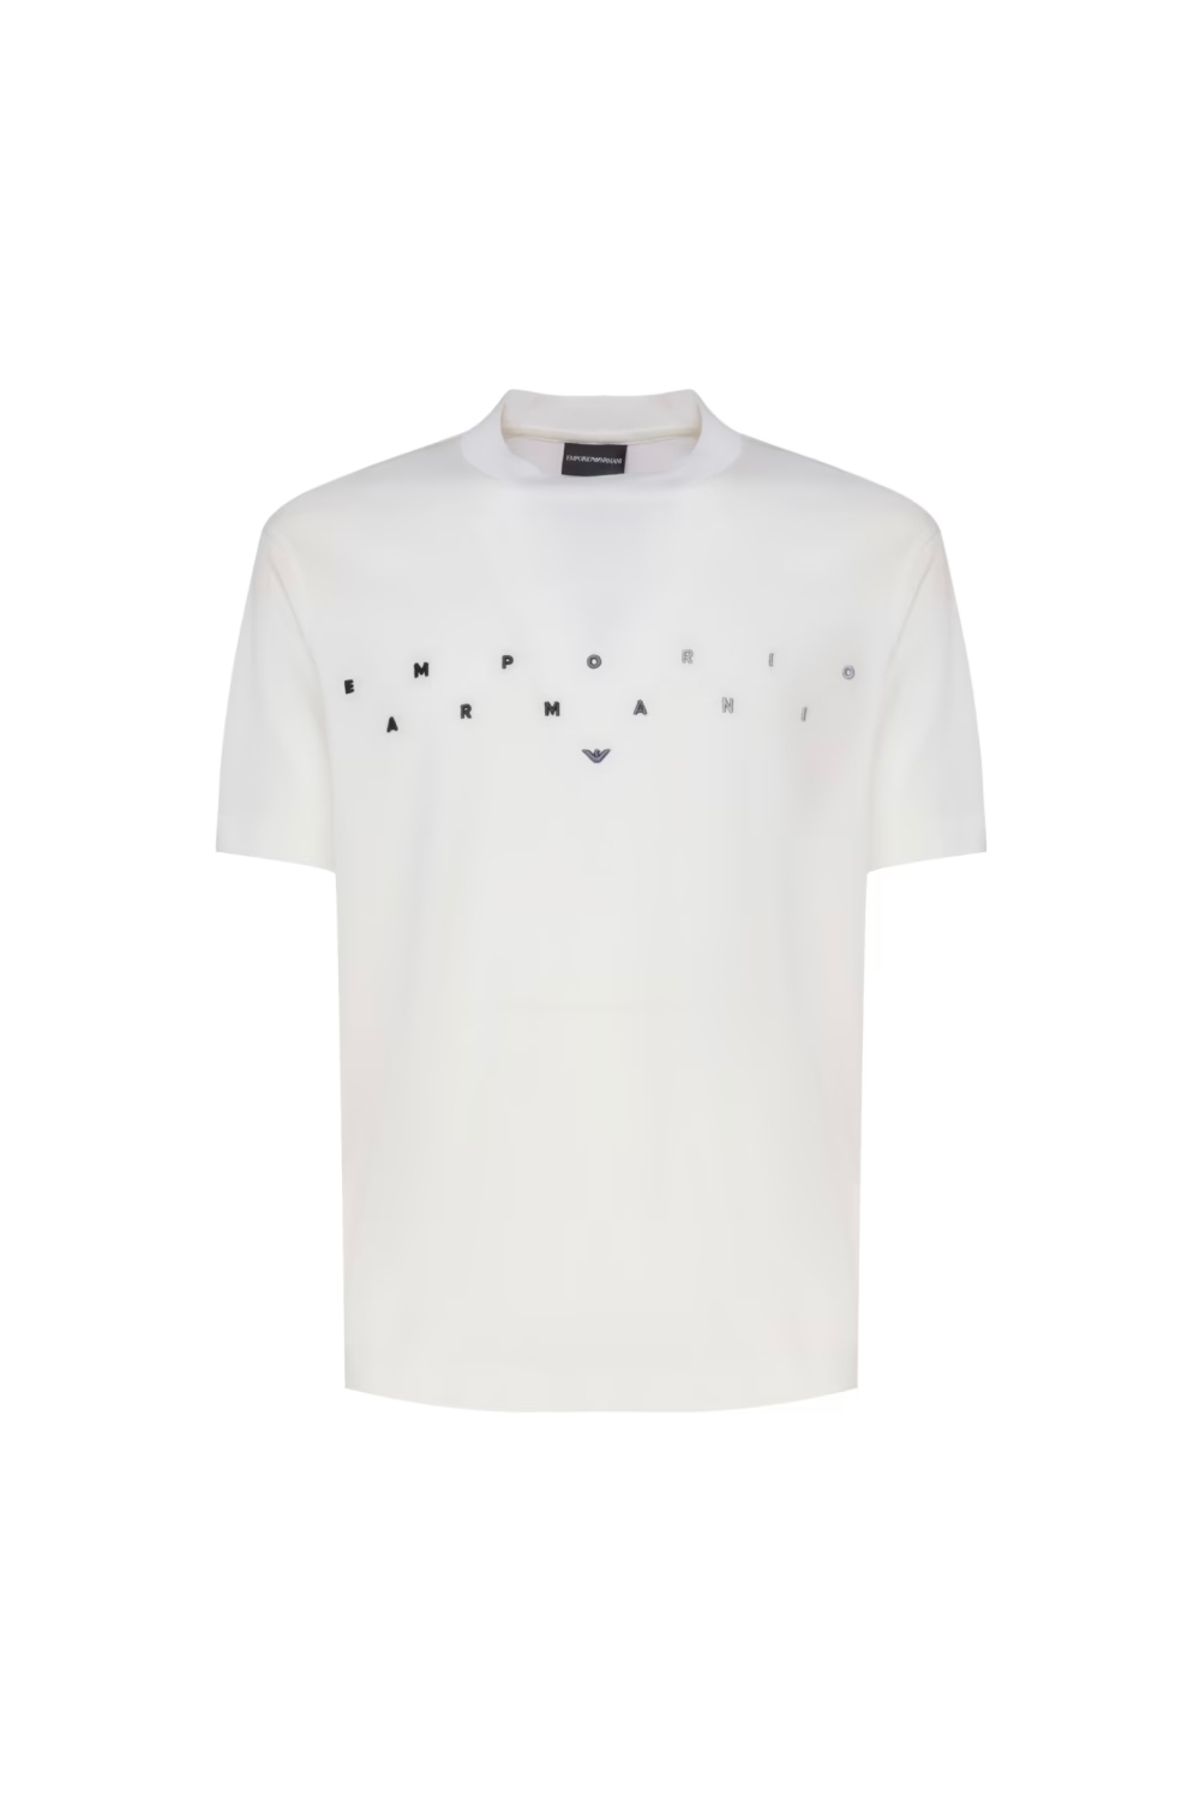 Emporio Armani Erkek Pamuklu Kısa Boy Rahat Kesim Günlük Beyaz T-Shirt 3D1TA2 1JUVZ-01B2